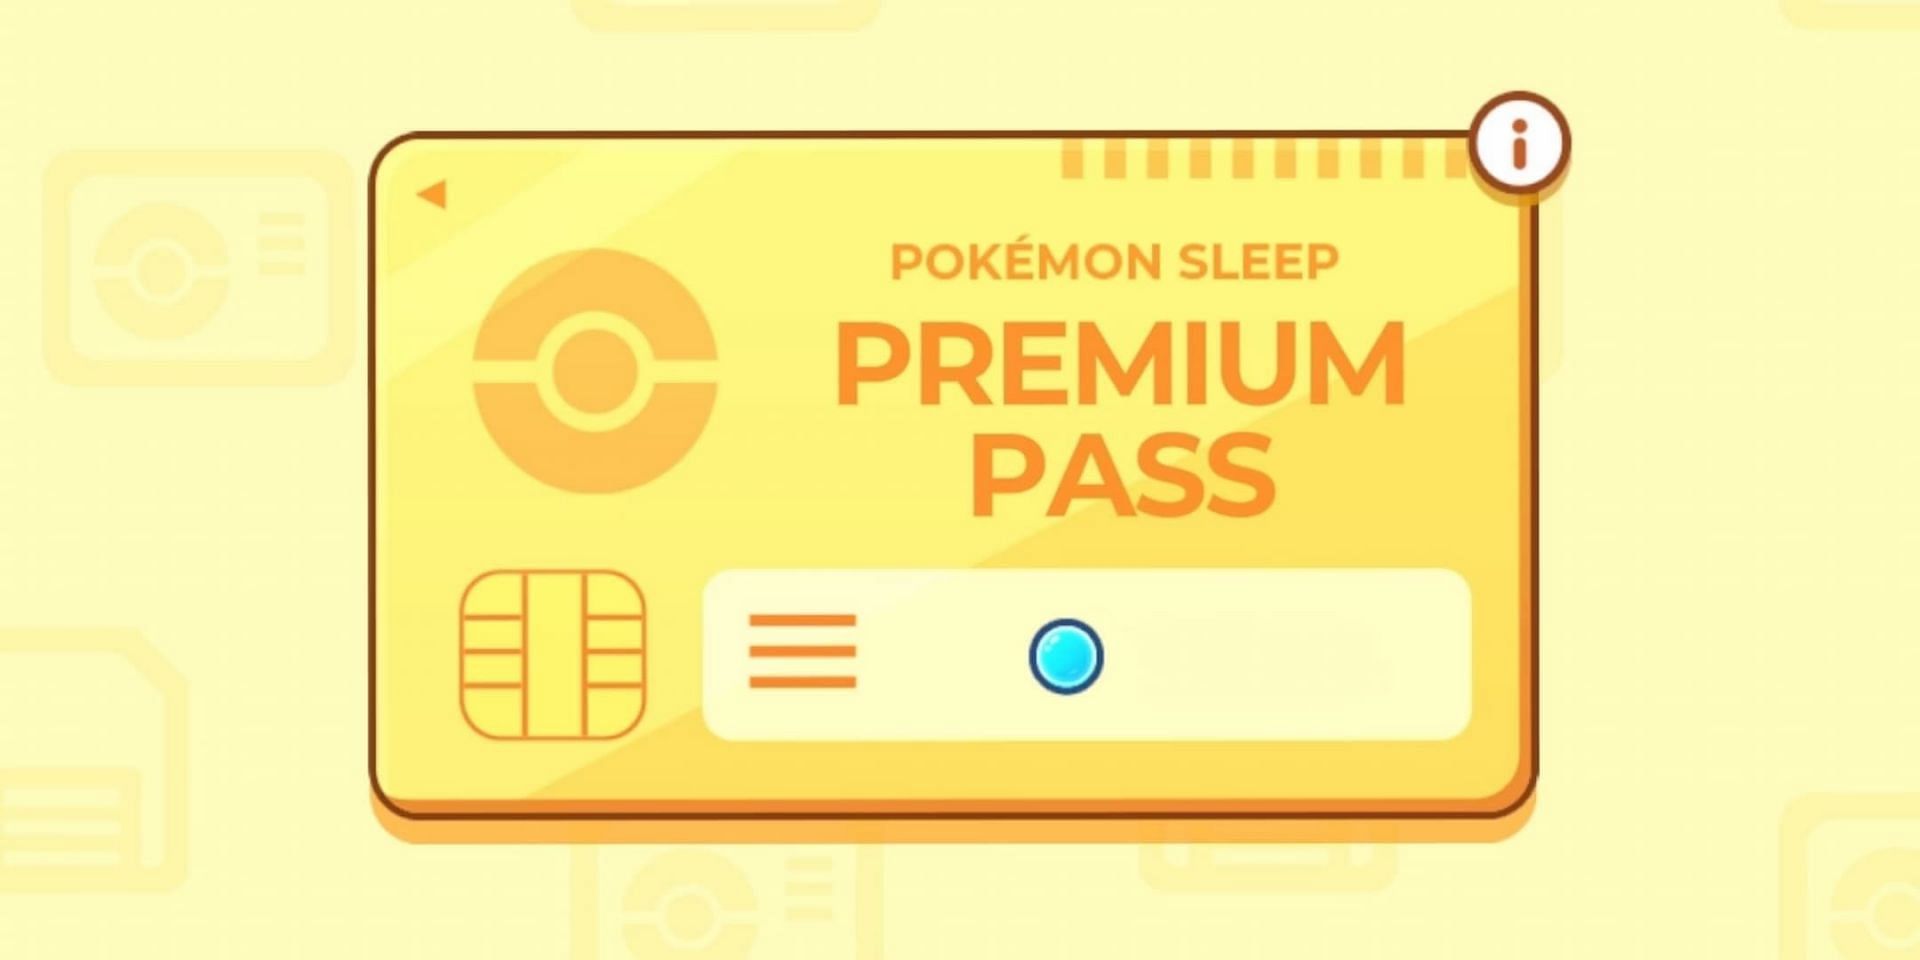 Pokemon Sleep Premium Pass (Image via The Pokemon Company)